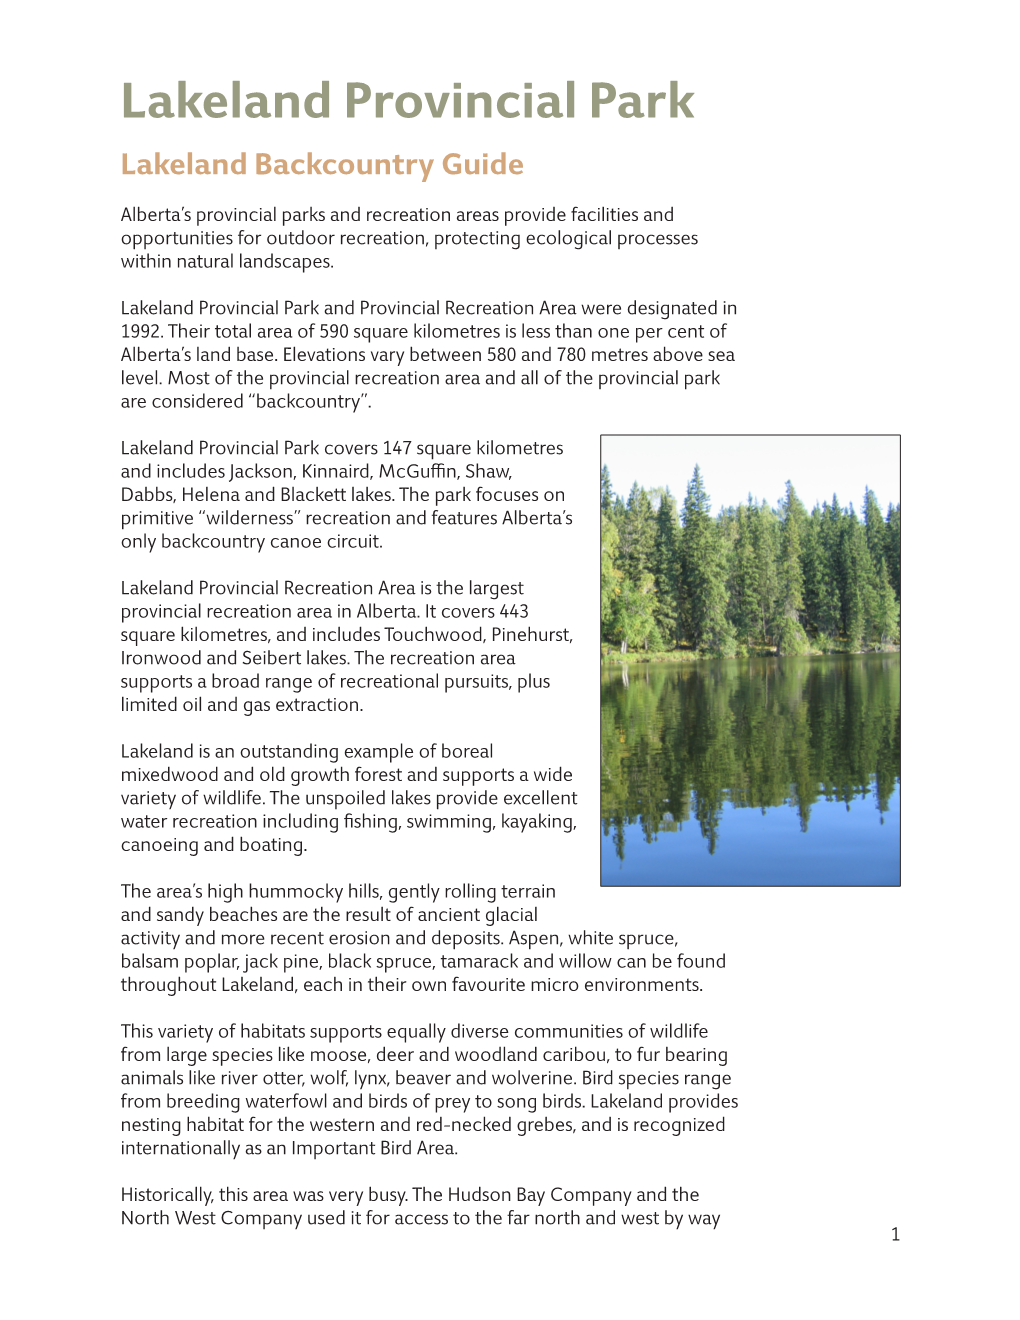 Lakeland Provincial Park Lakeland Backcountry Guide